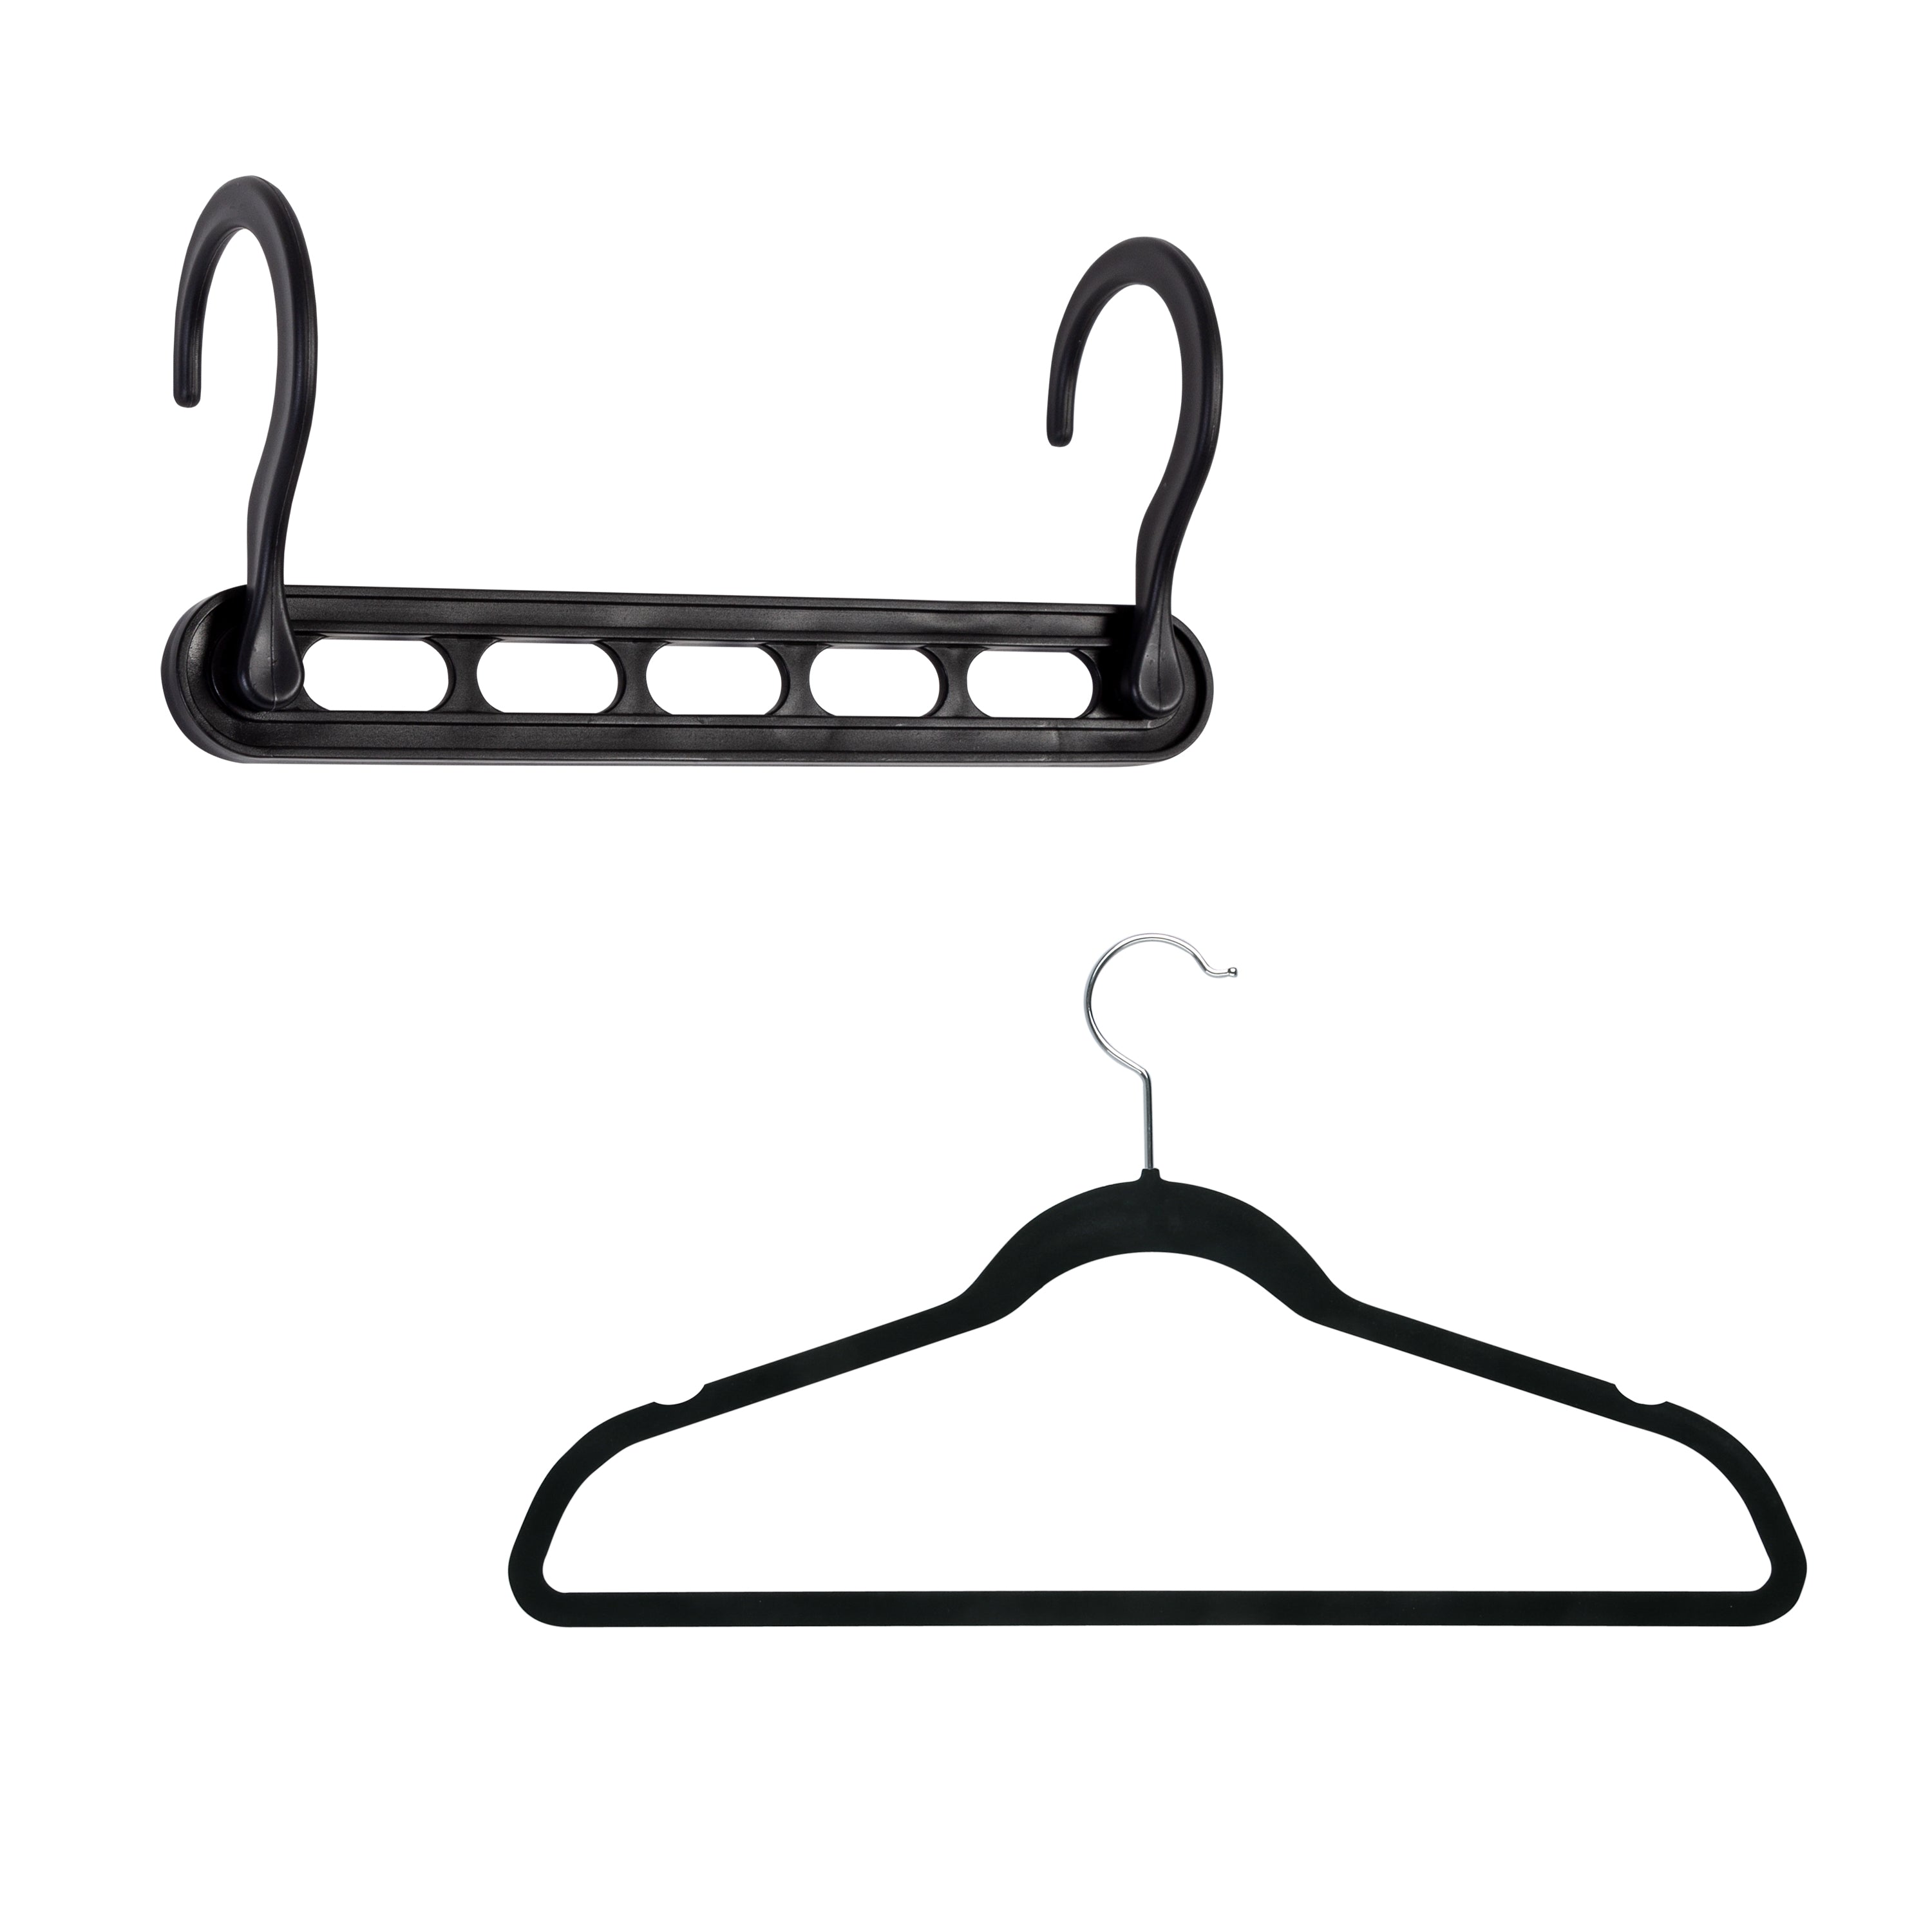 HAY Hang hanger, 5 pcs, black